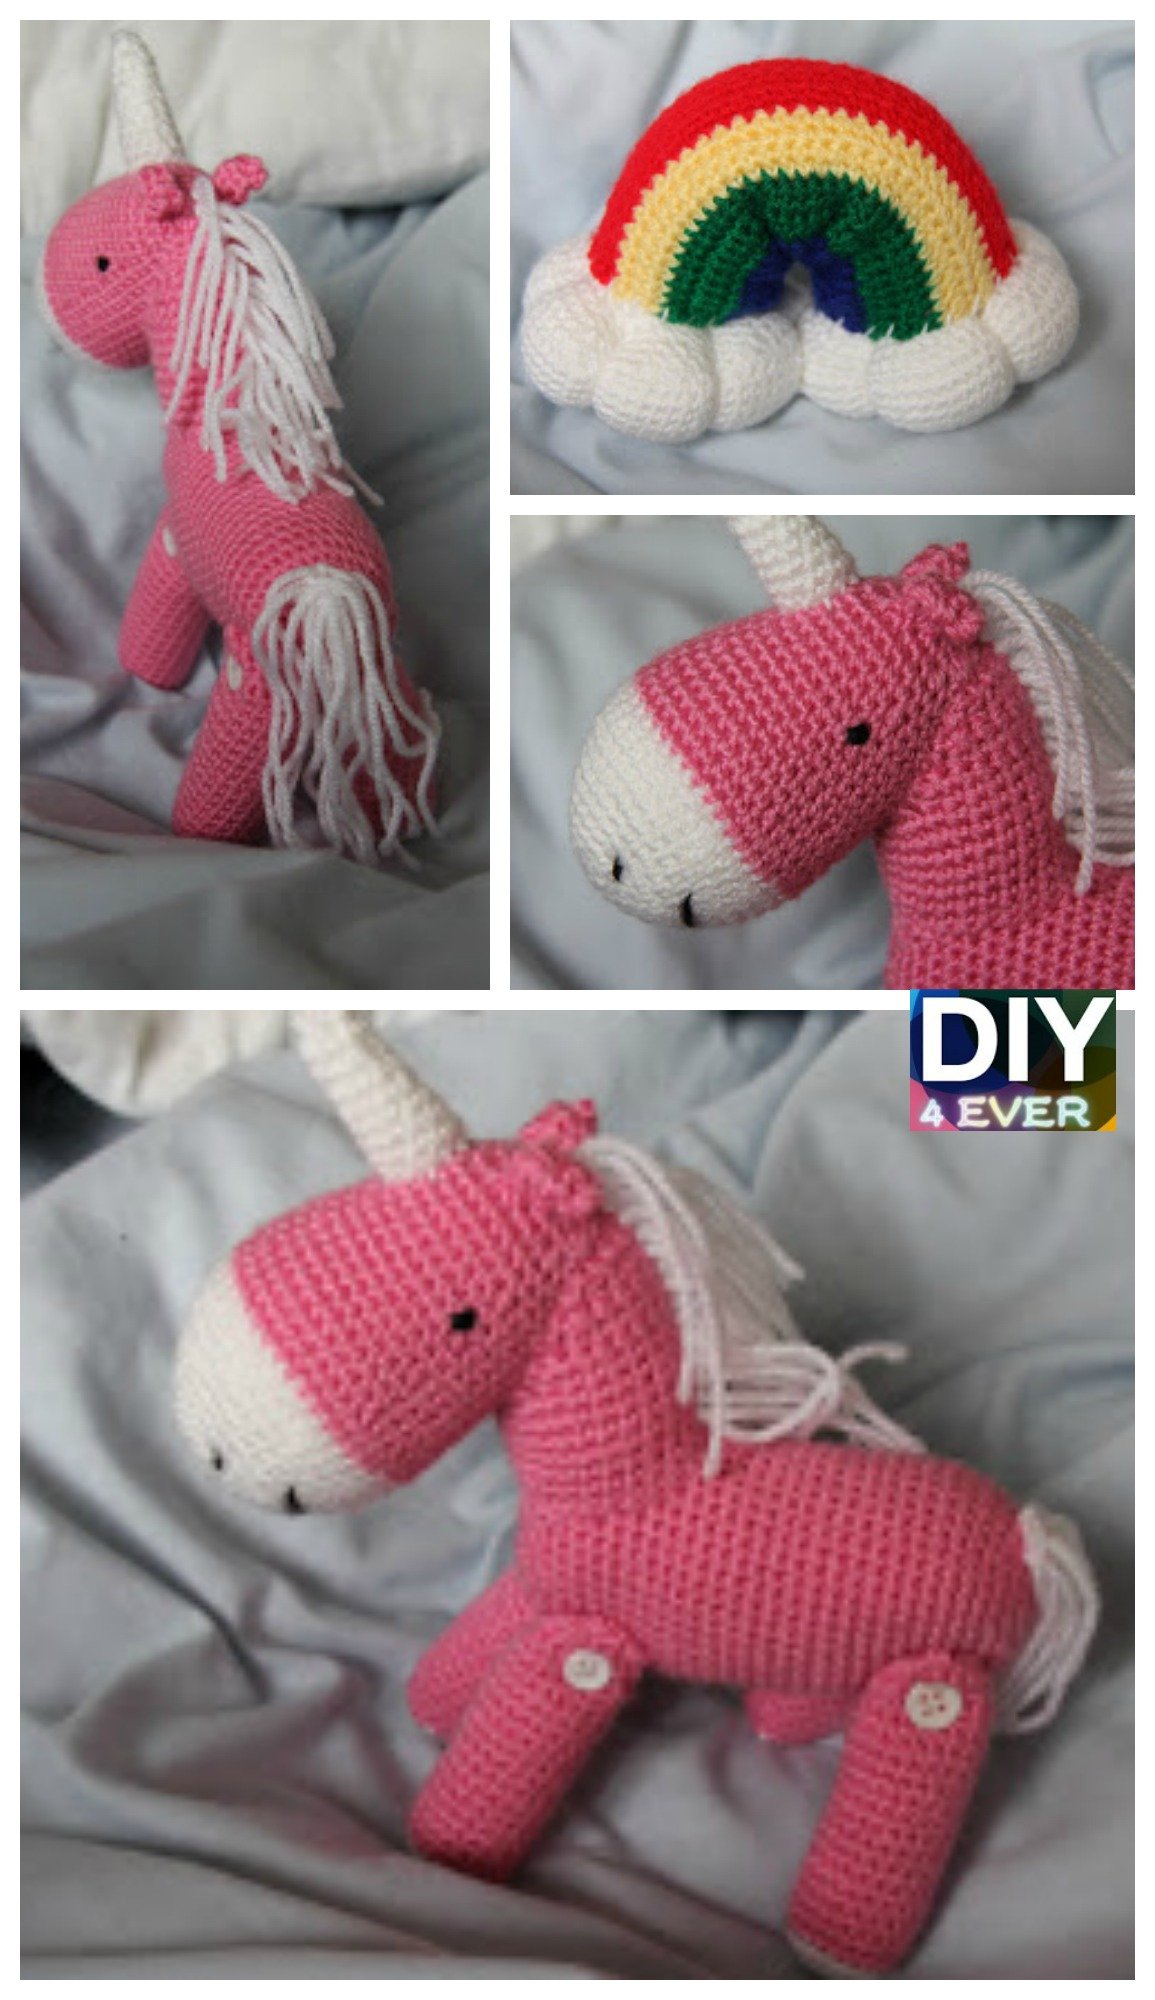 Free Unicorn Crochet Pattern 10 Cutest Crochet Unicorn Free Patterns Diy 4 Ever